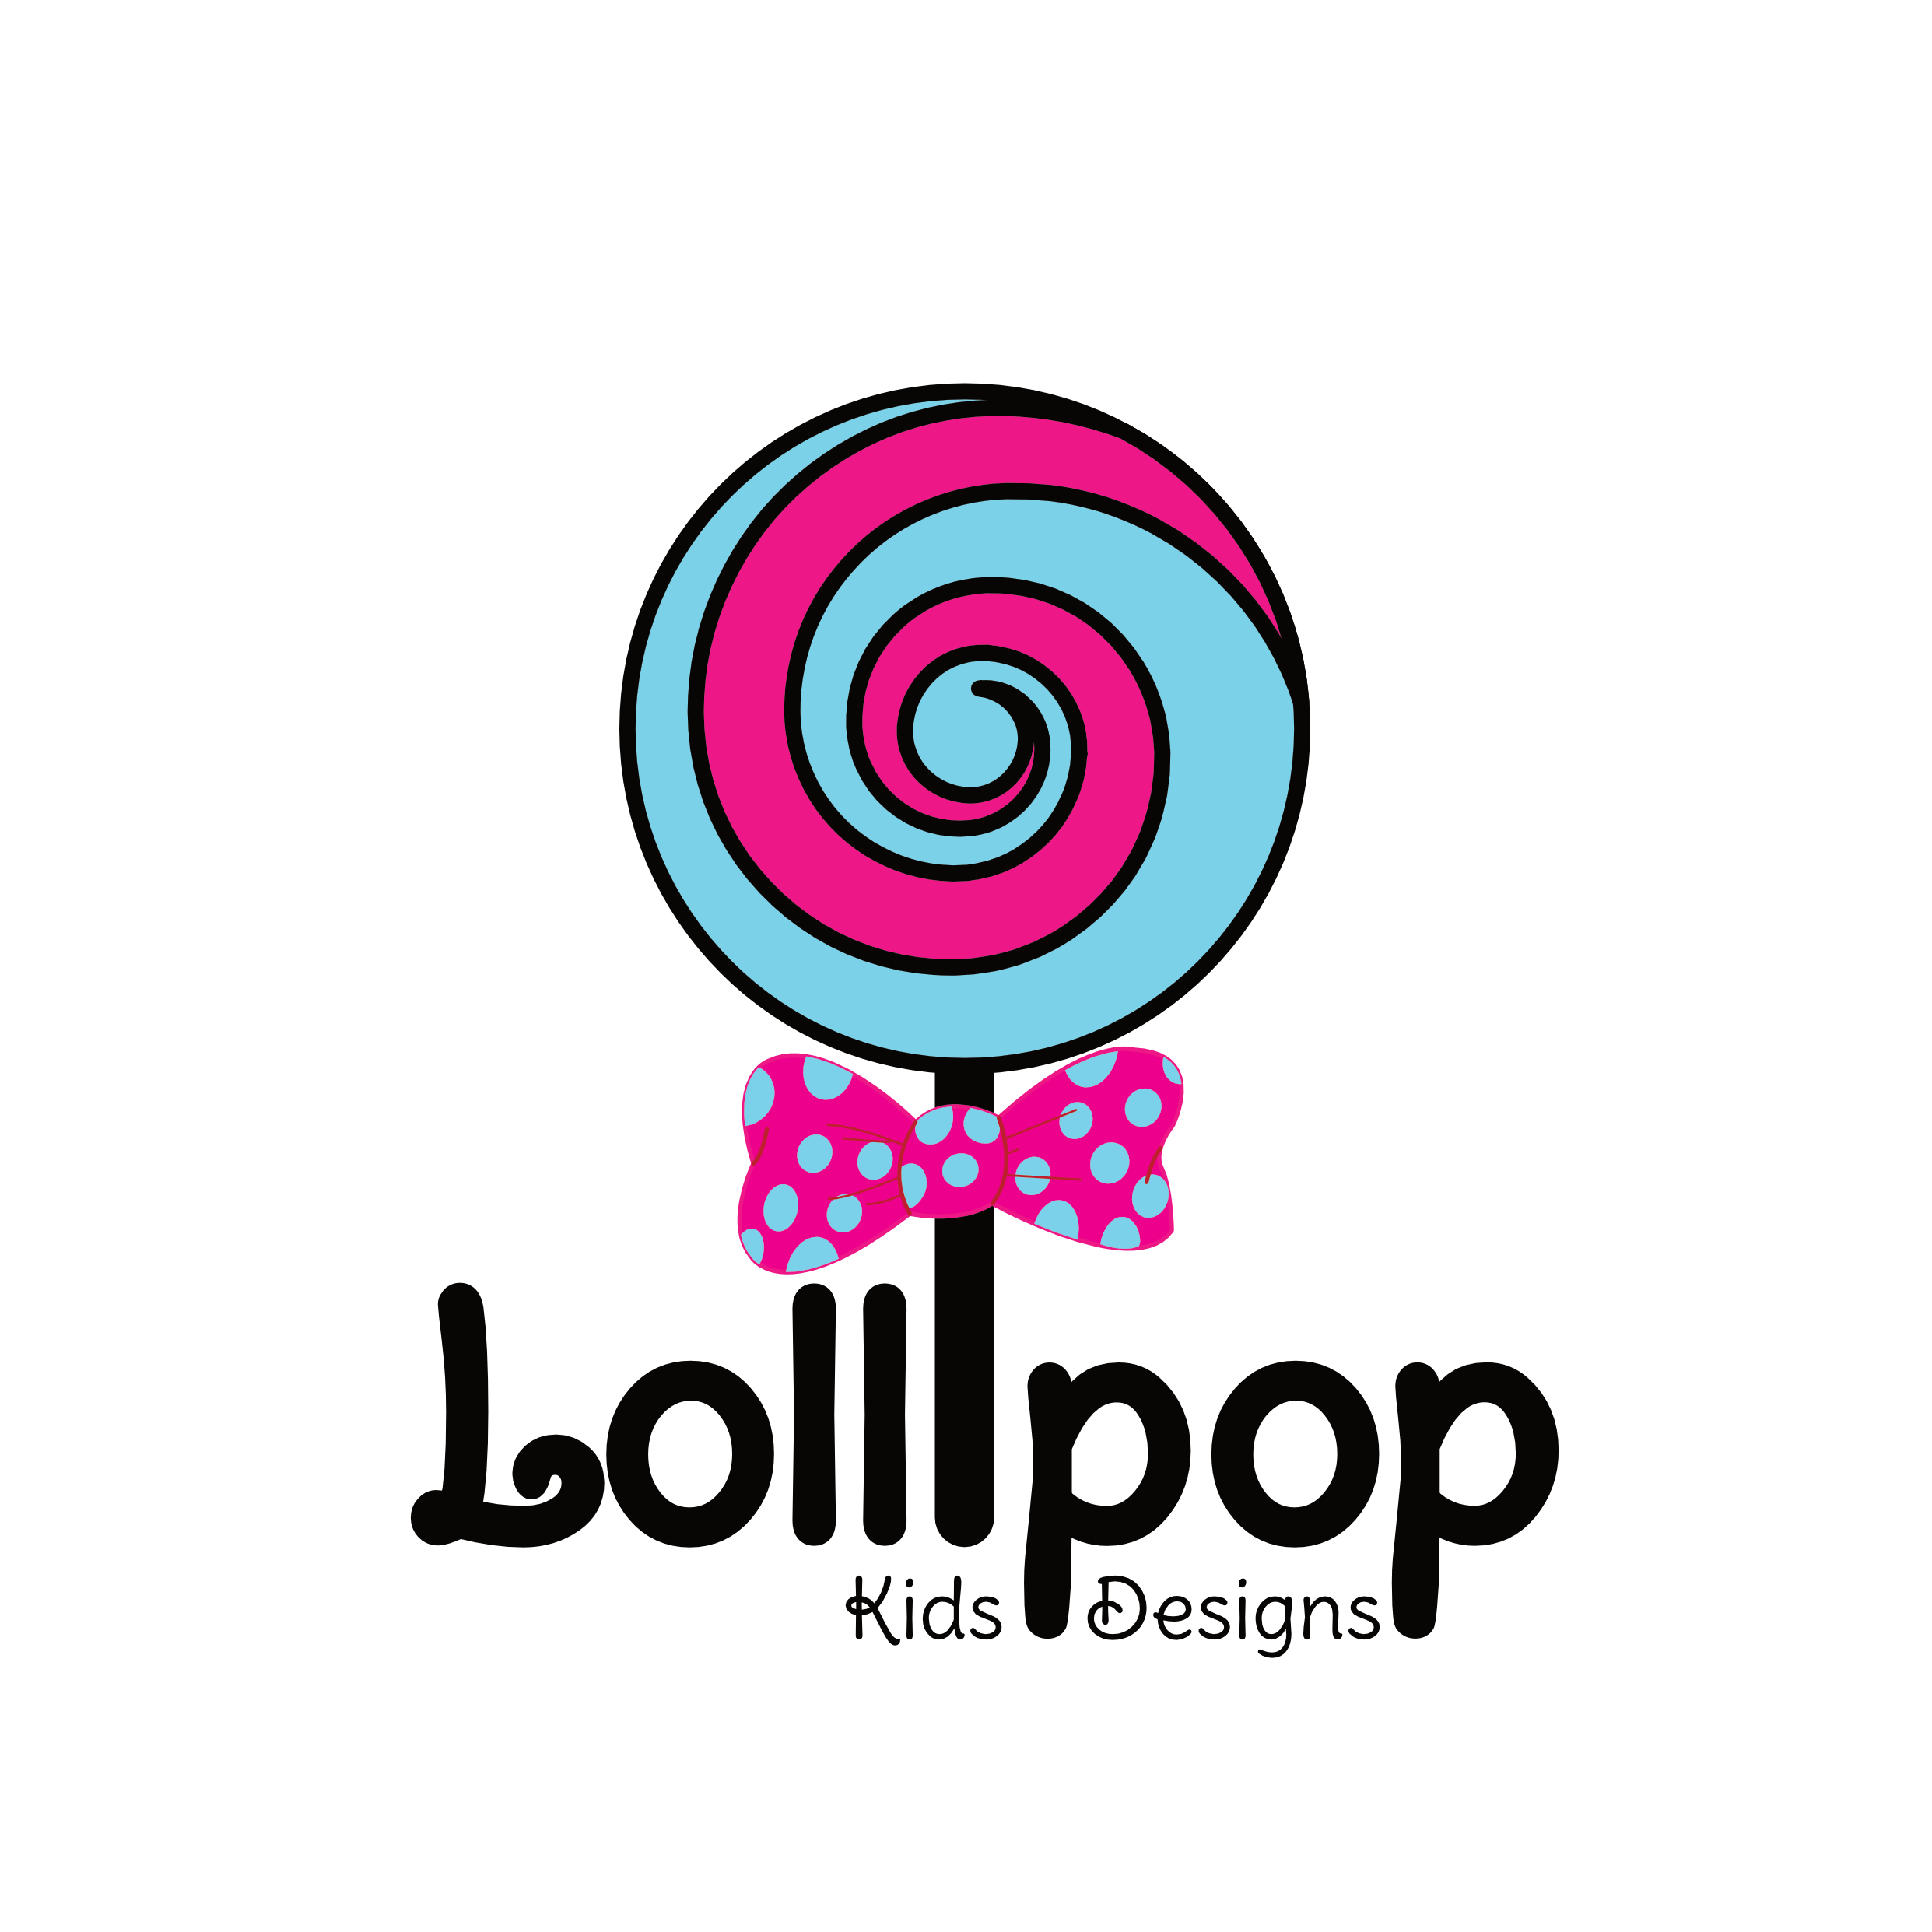 Lollipop Kids Designs